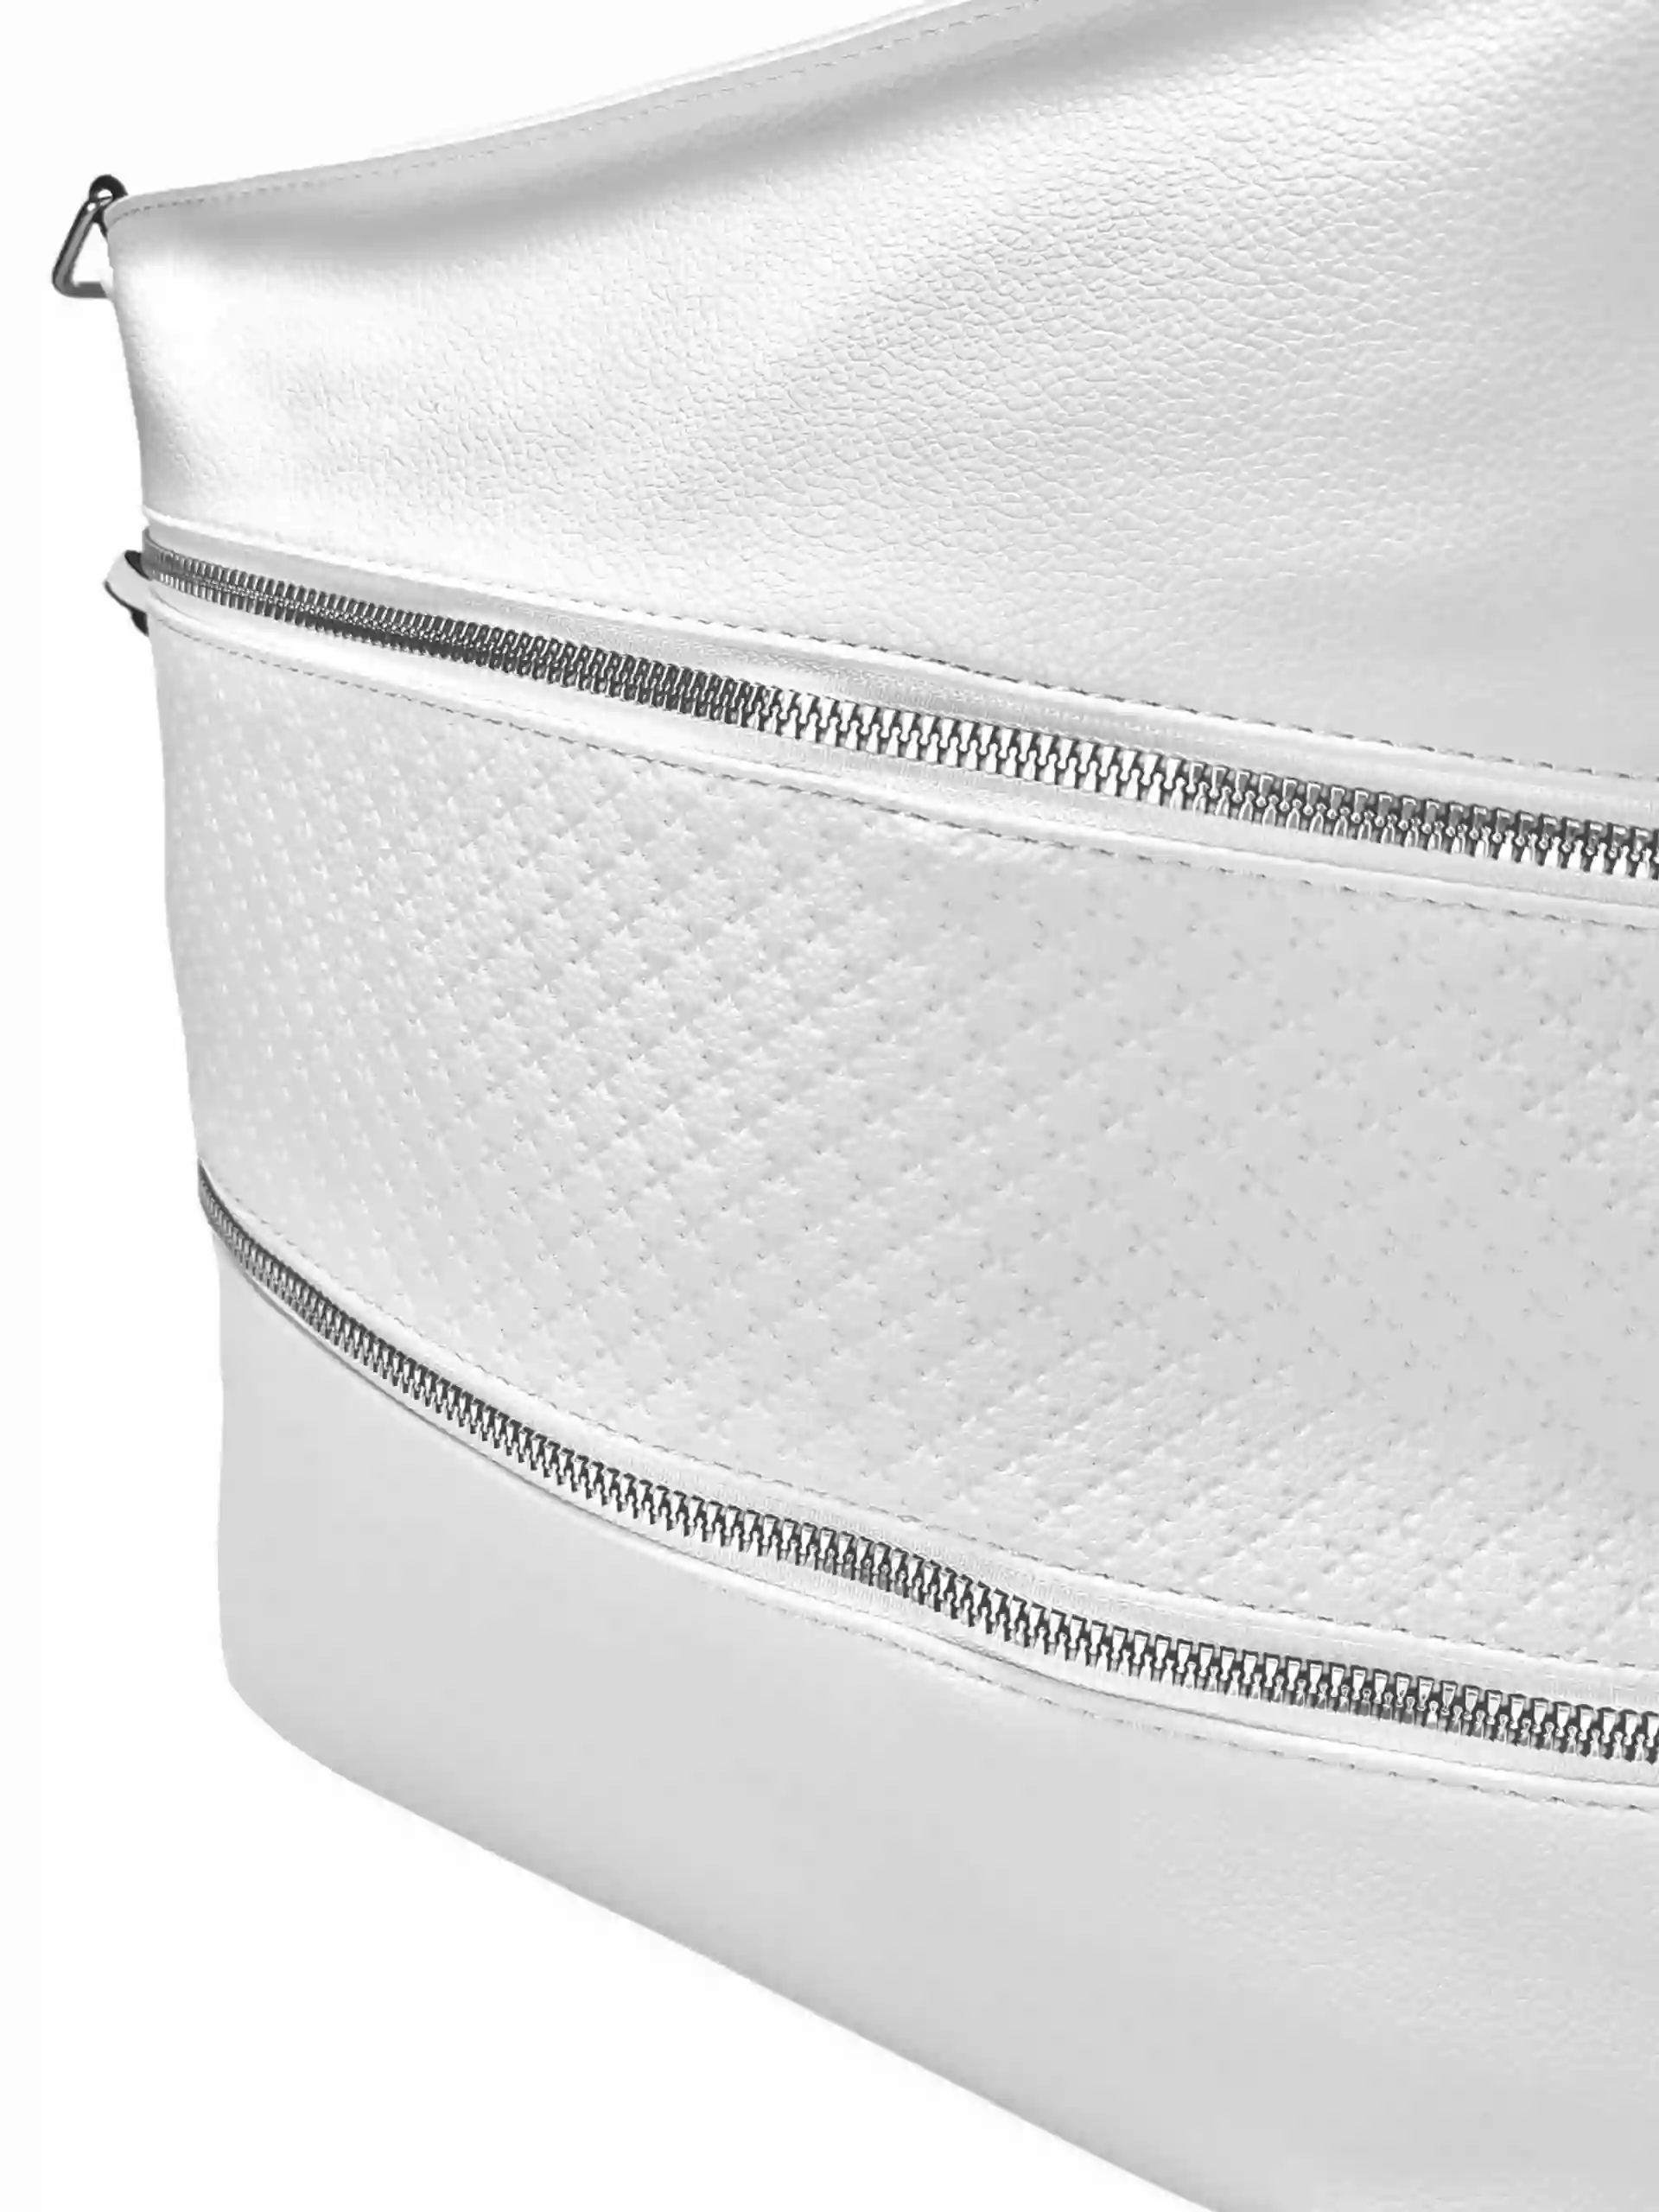 Bílá crossbody kabelka s šikmými kapsami, Tapple, H18007, detail crossbody kabelky